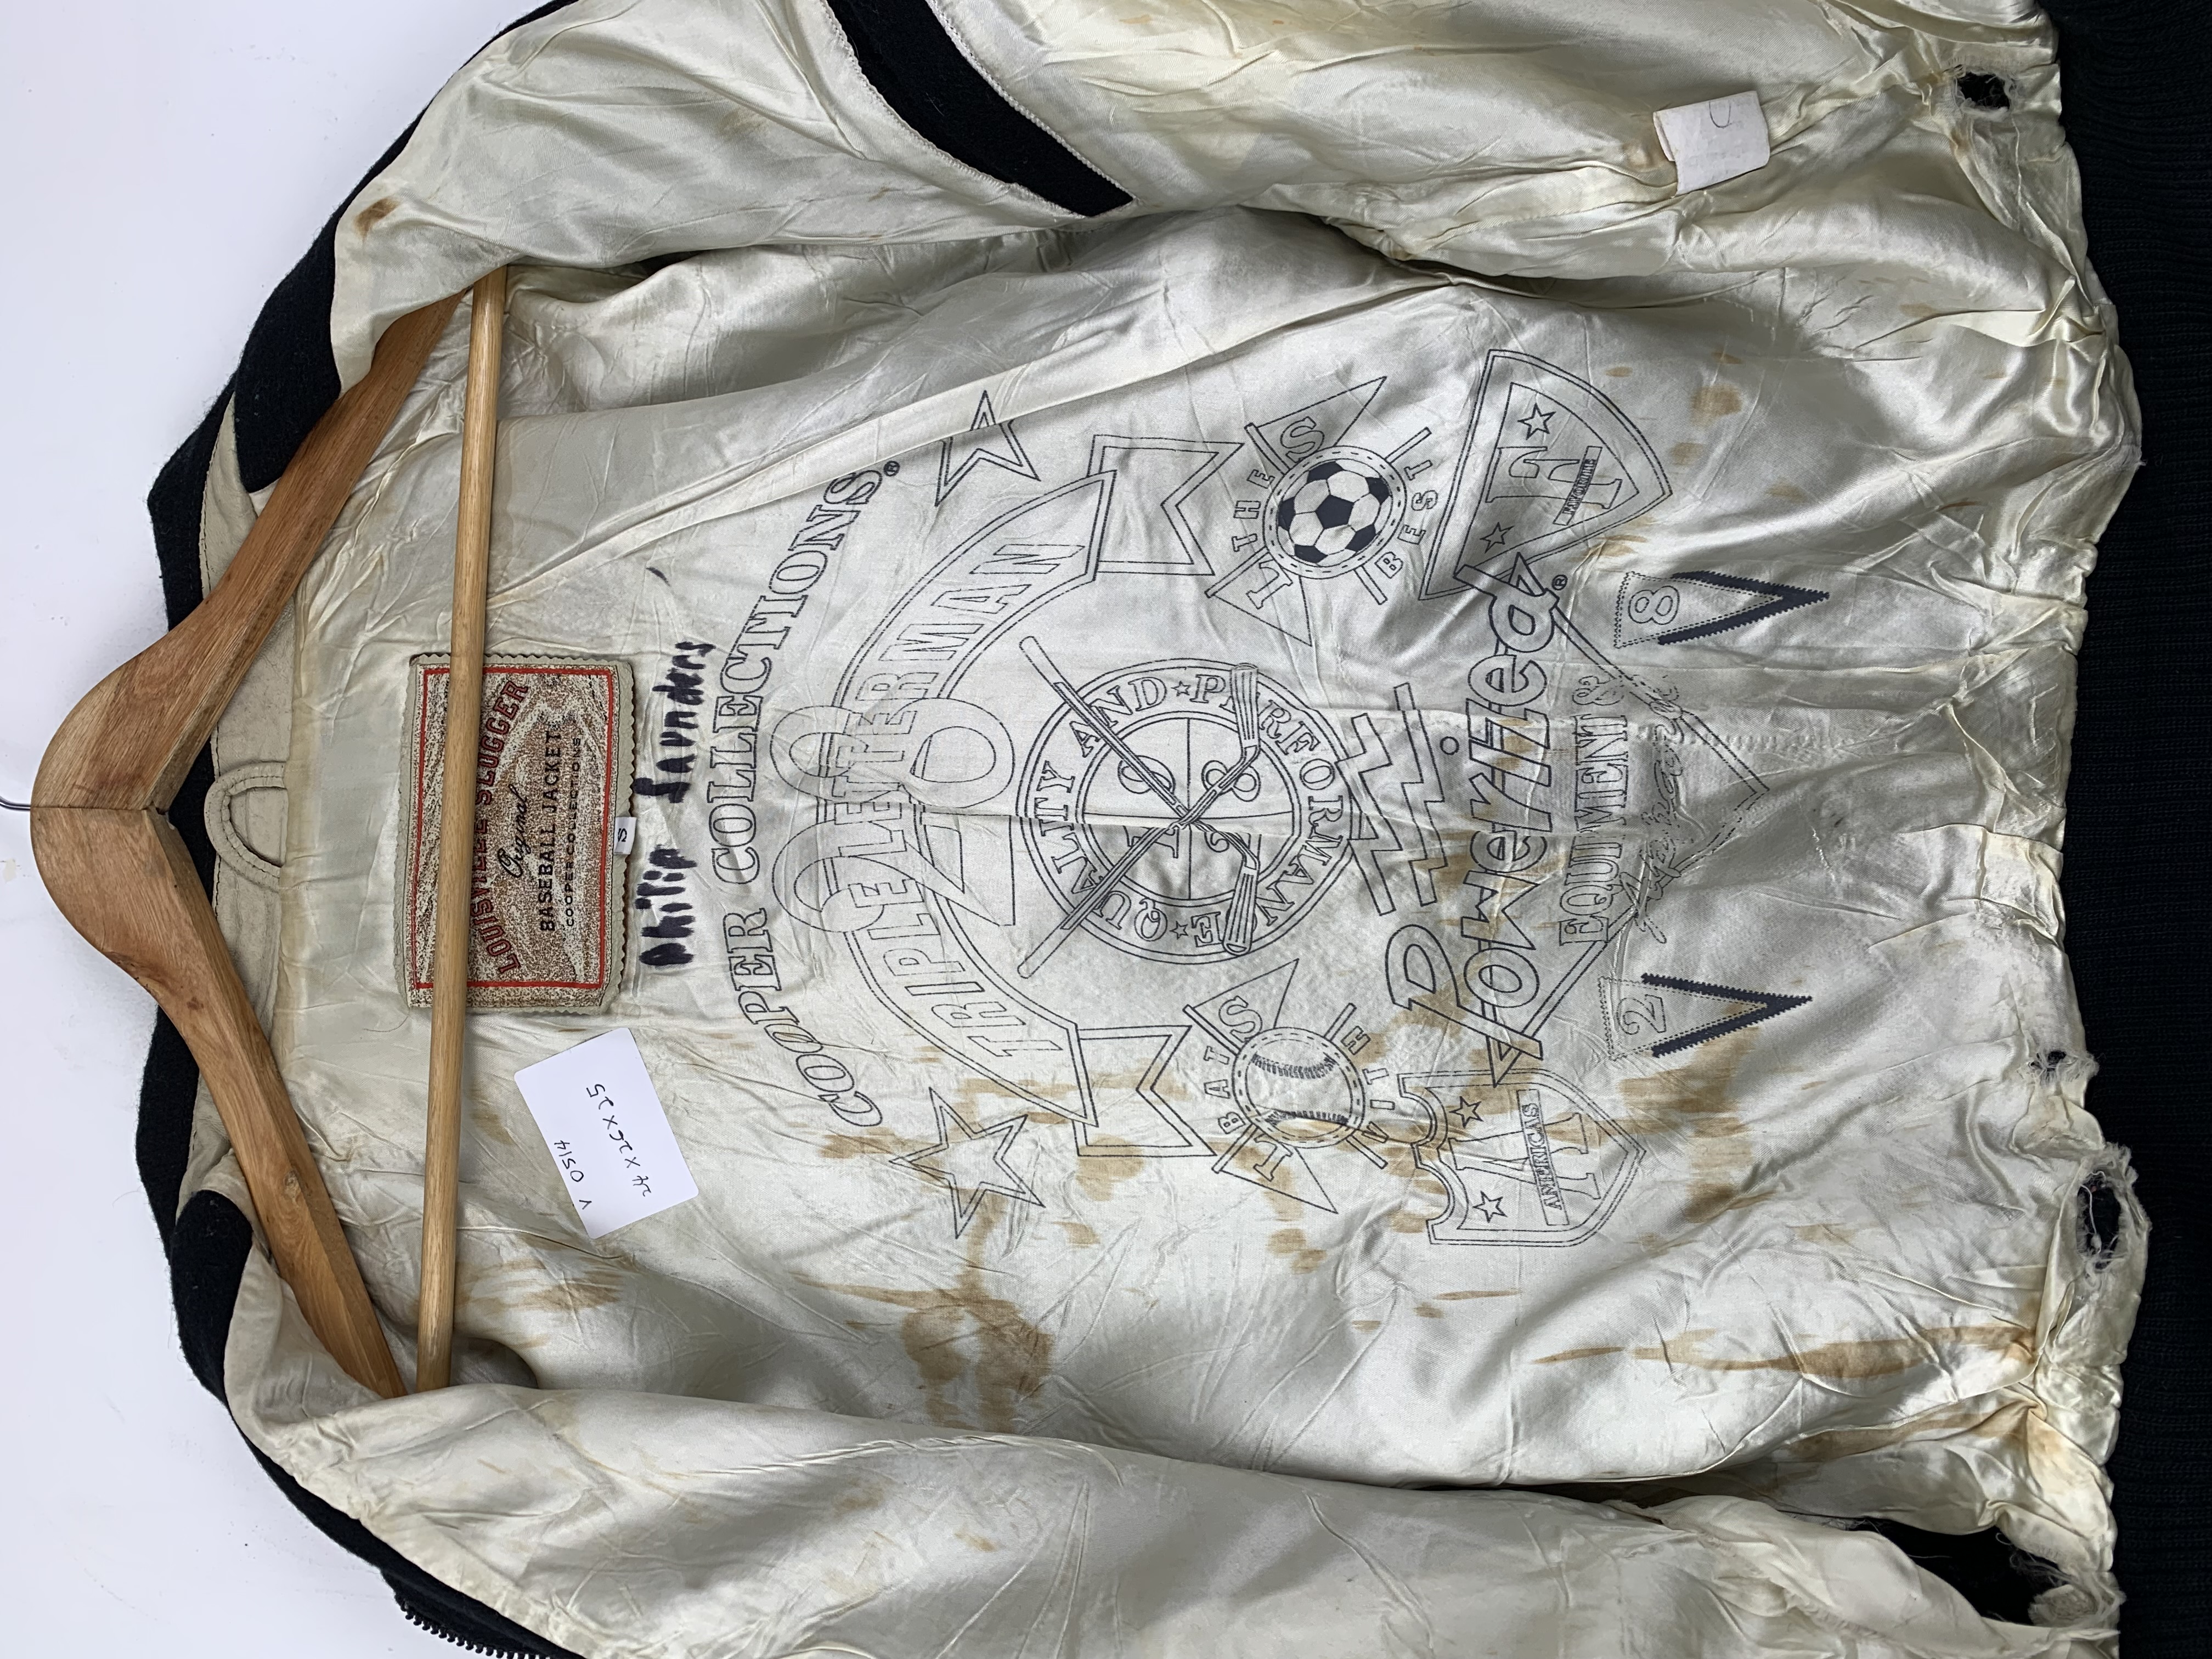 Vintage 1990s Louisville Slugger Baseball Leather Varsity Jacket